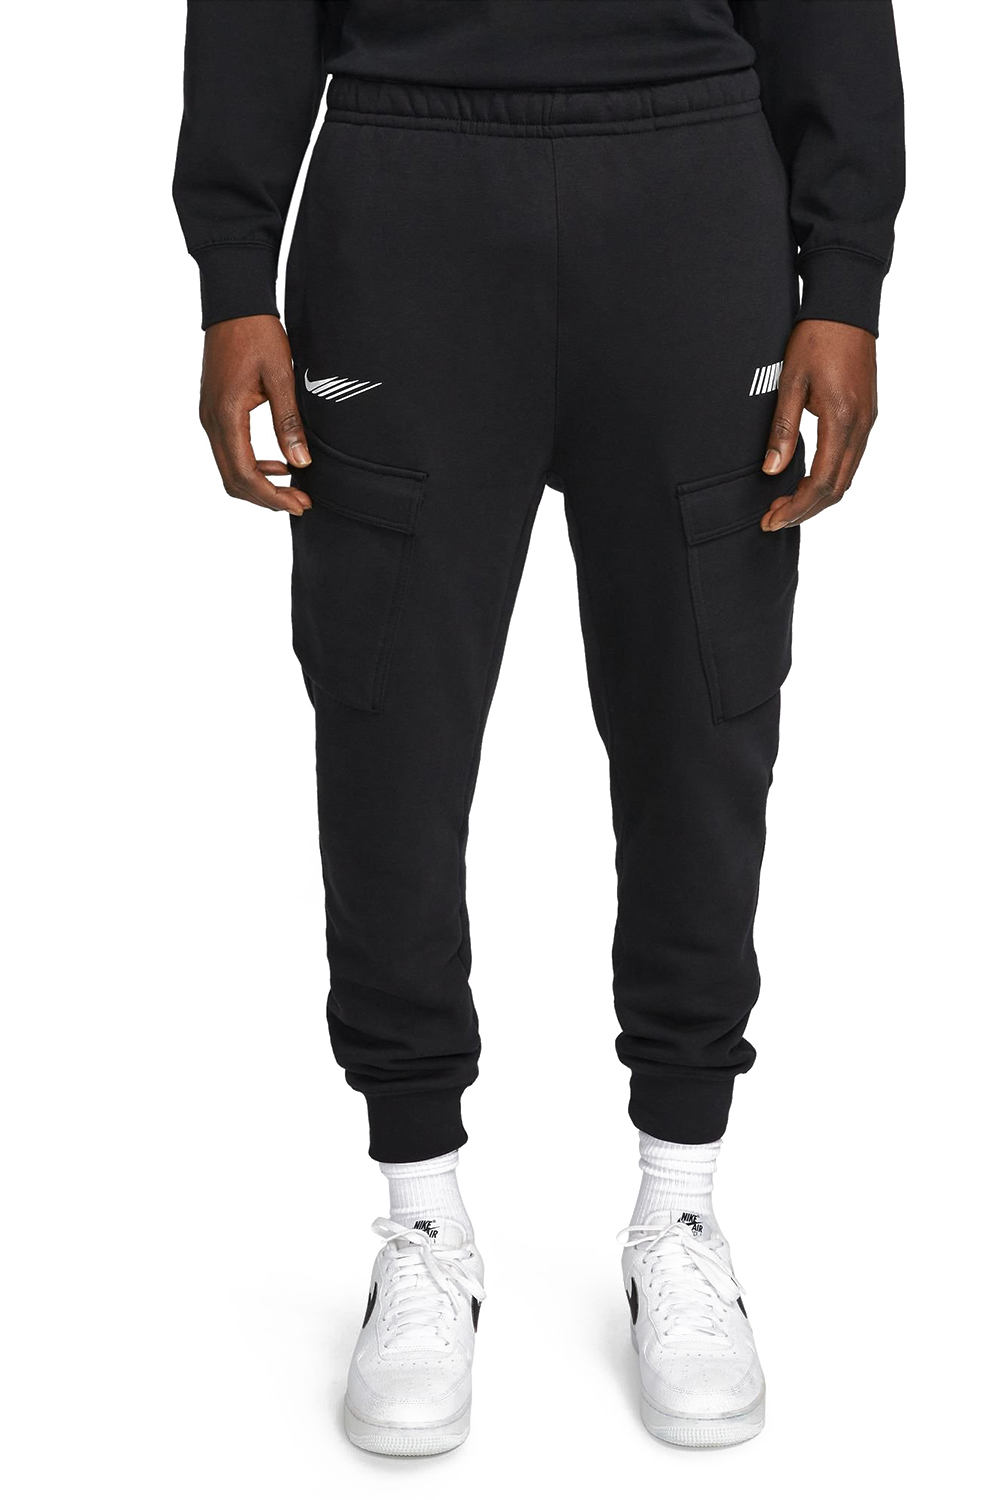 Nike Cargo Pant Black 23415